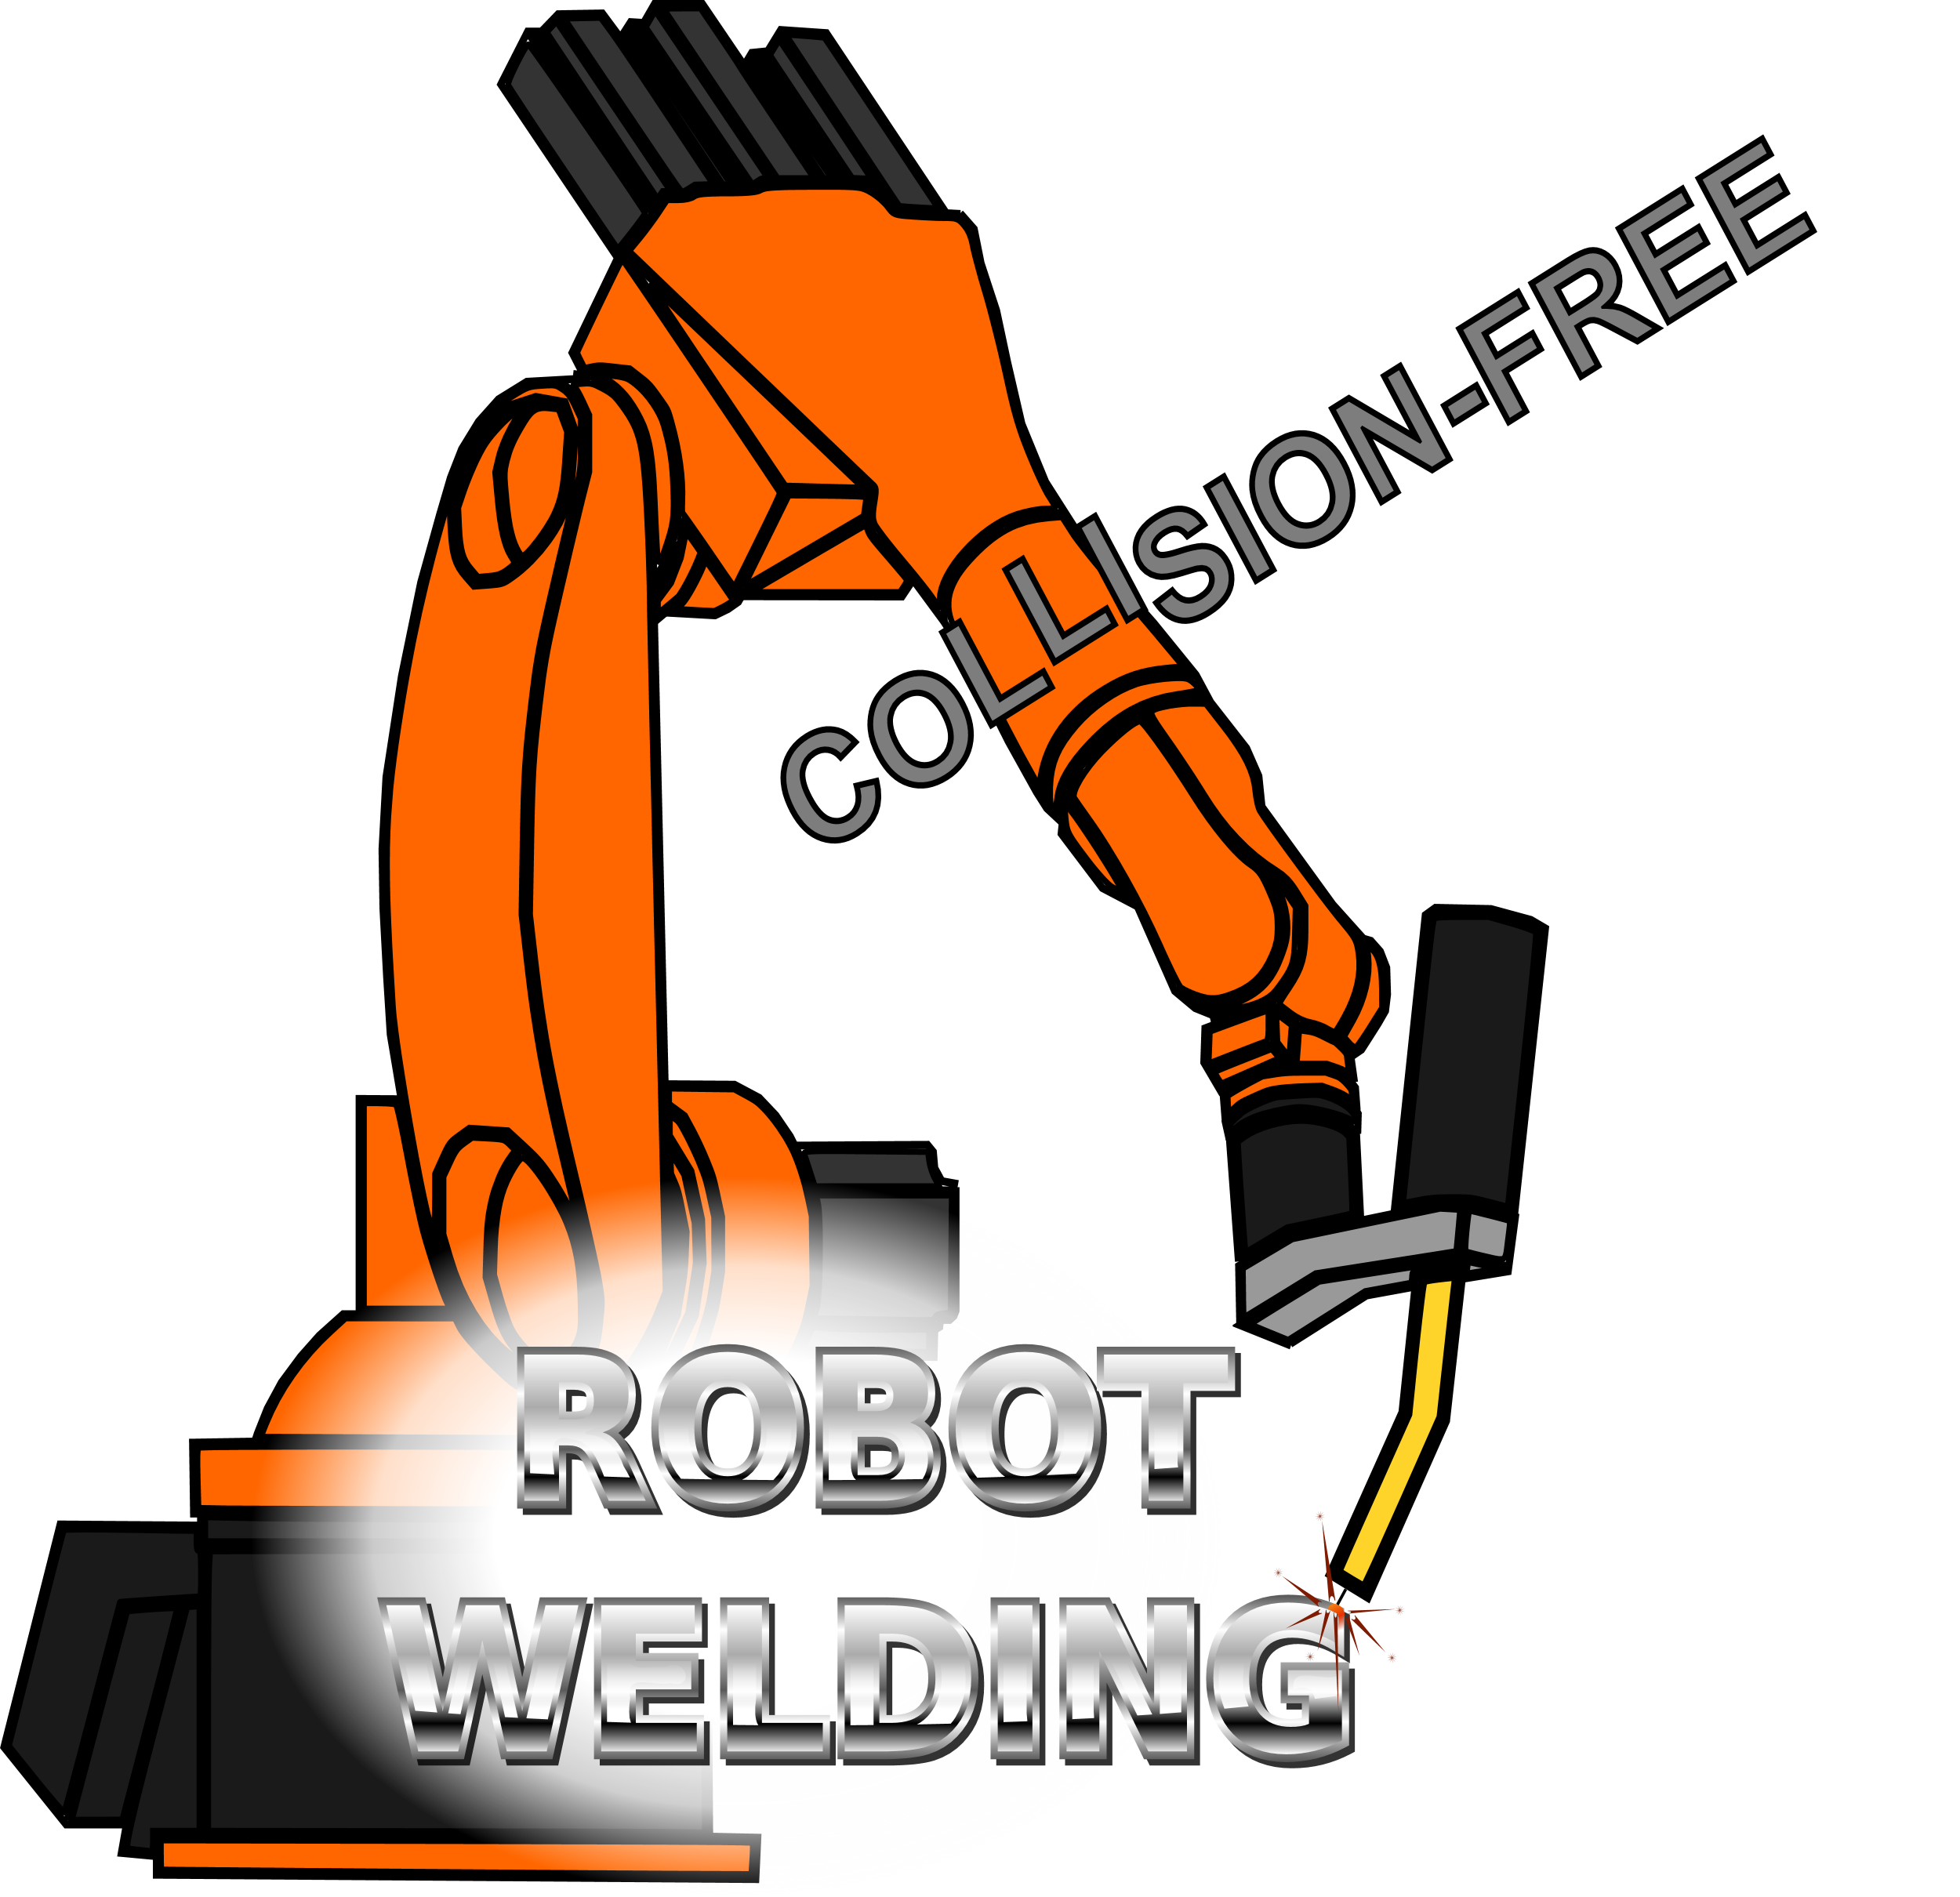 Automatic path planning for robotic weldingimage